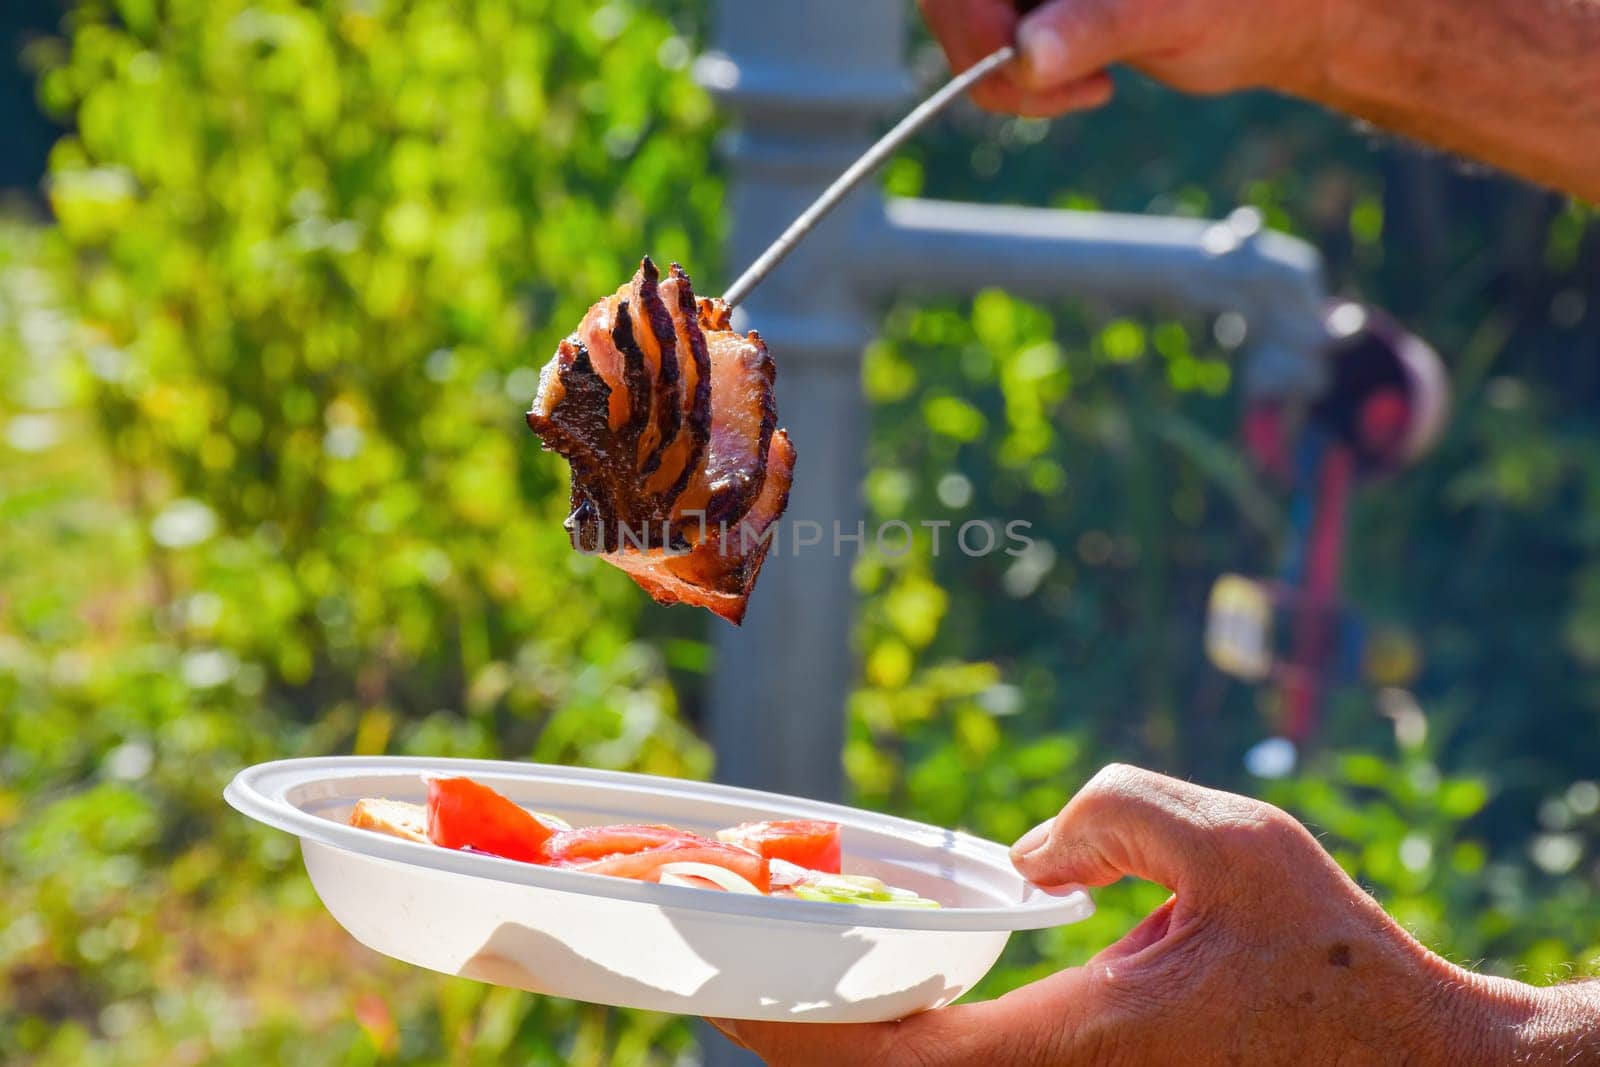 Garden bacon roasting at summer. by GraffiTimi